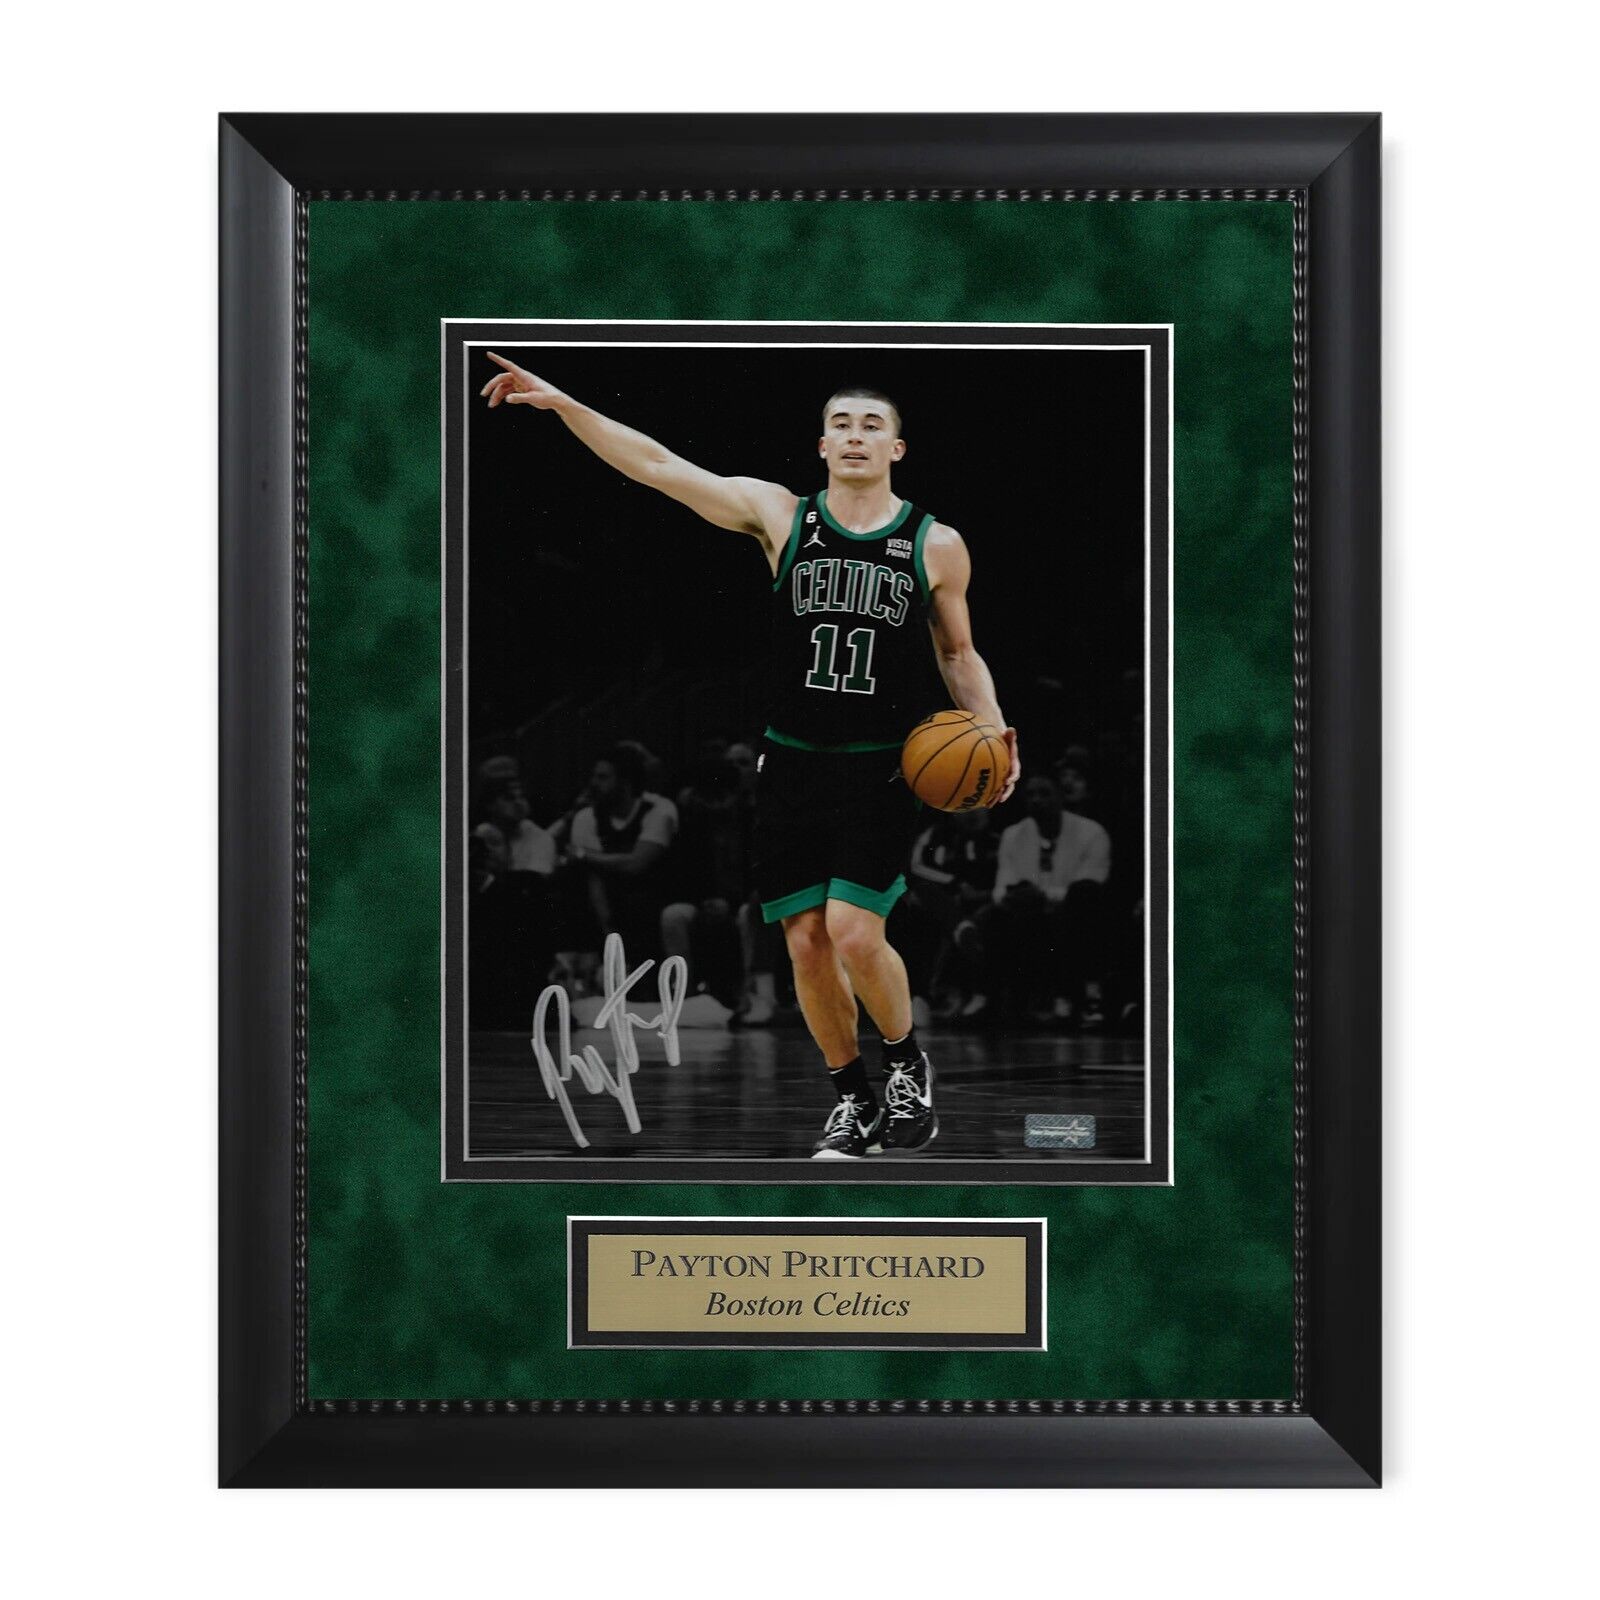 Payton Pritchard Boston Celtics Autographed 8x10 Photo Framed to 11x14 NEP